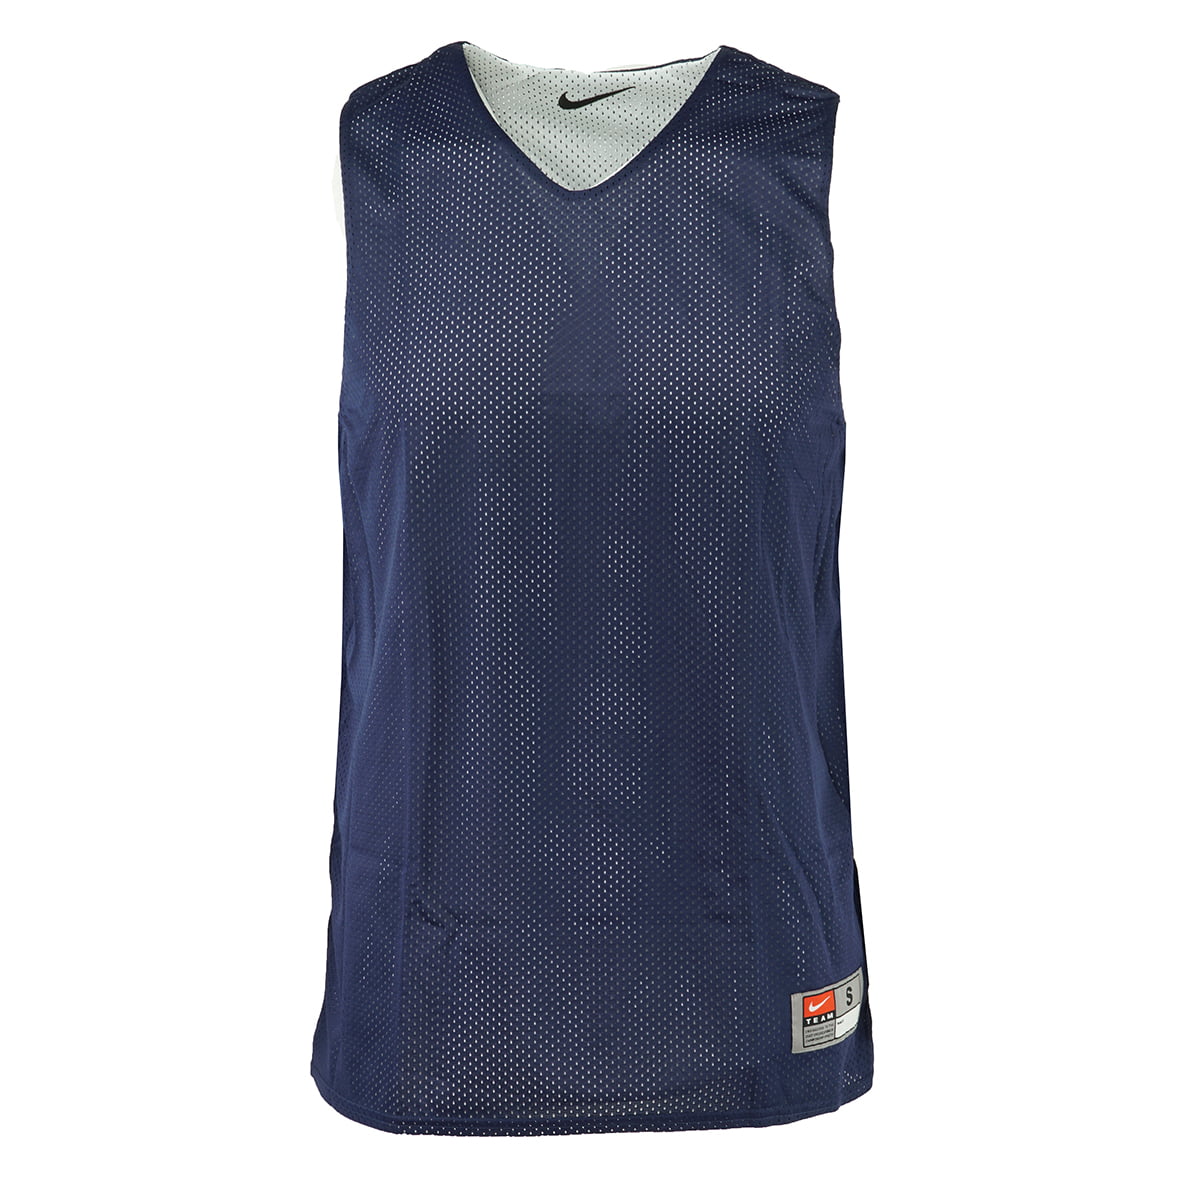 Nike - Nike Men\'s Reversible Basketball Practice Jersey - Walmart.com ...